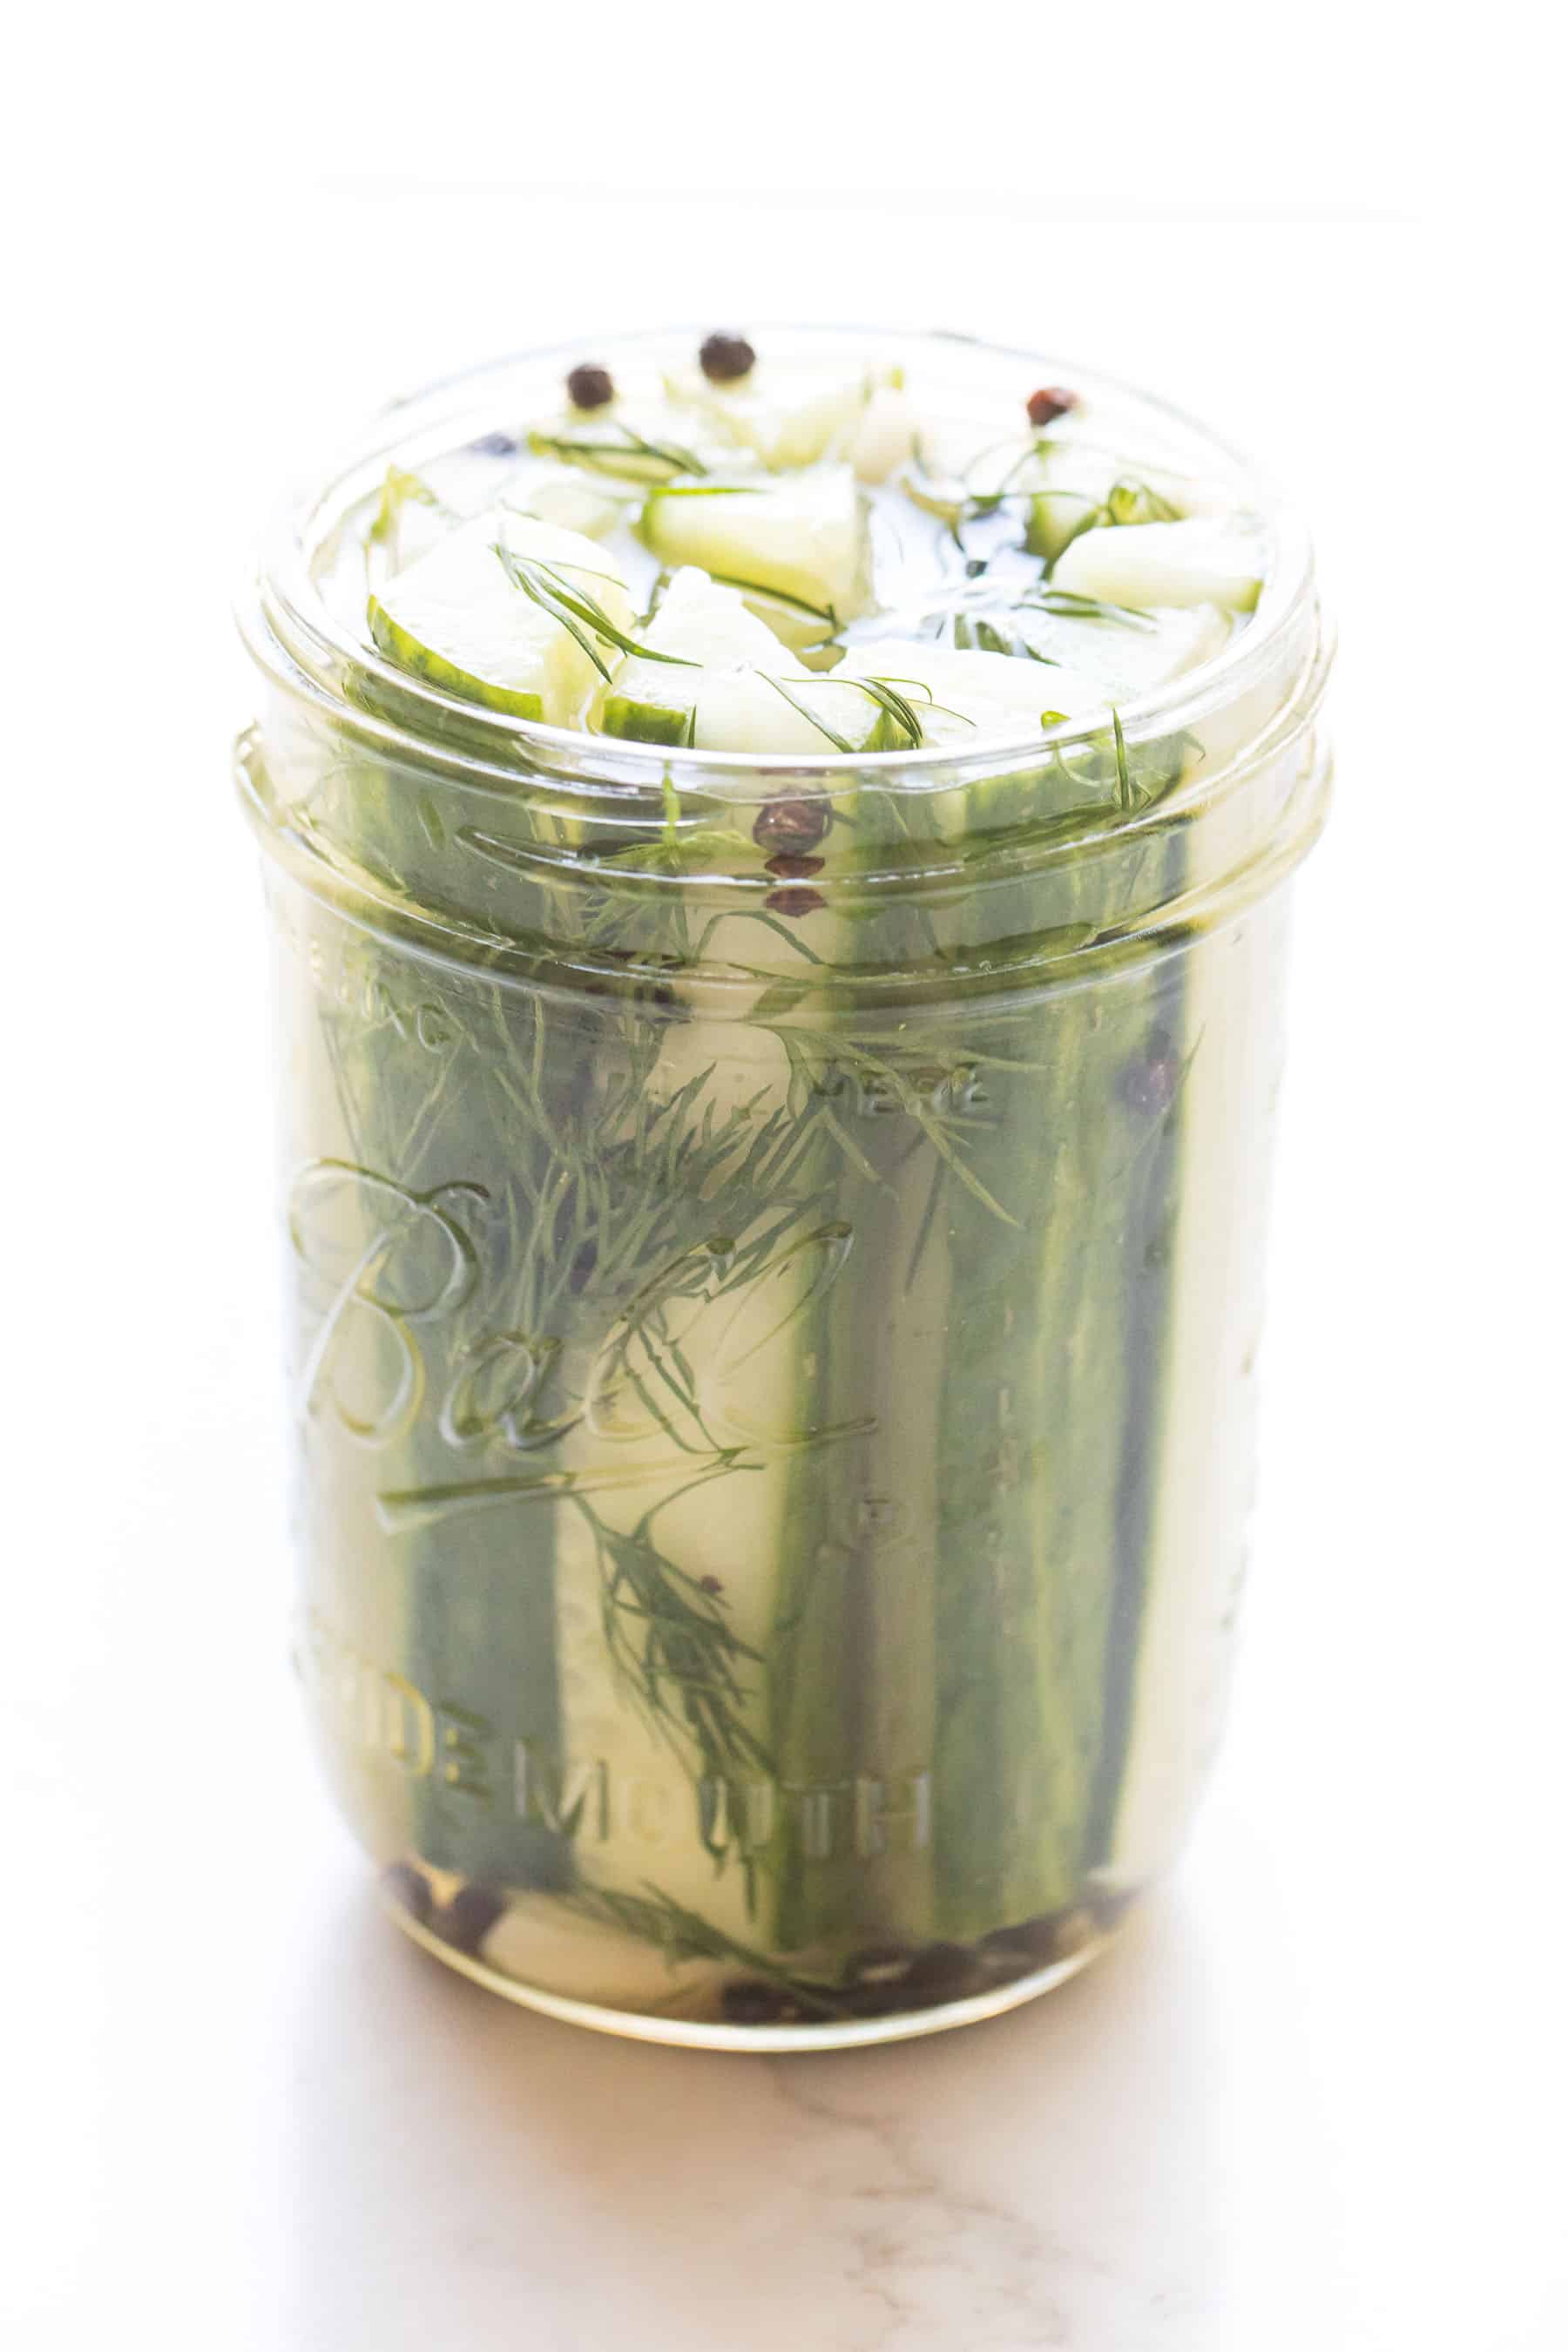 homemade pickles in a mason jar